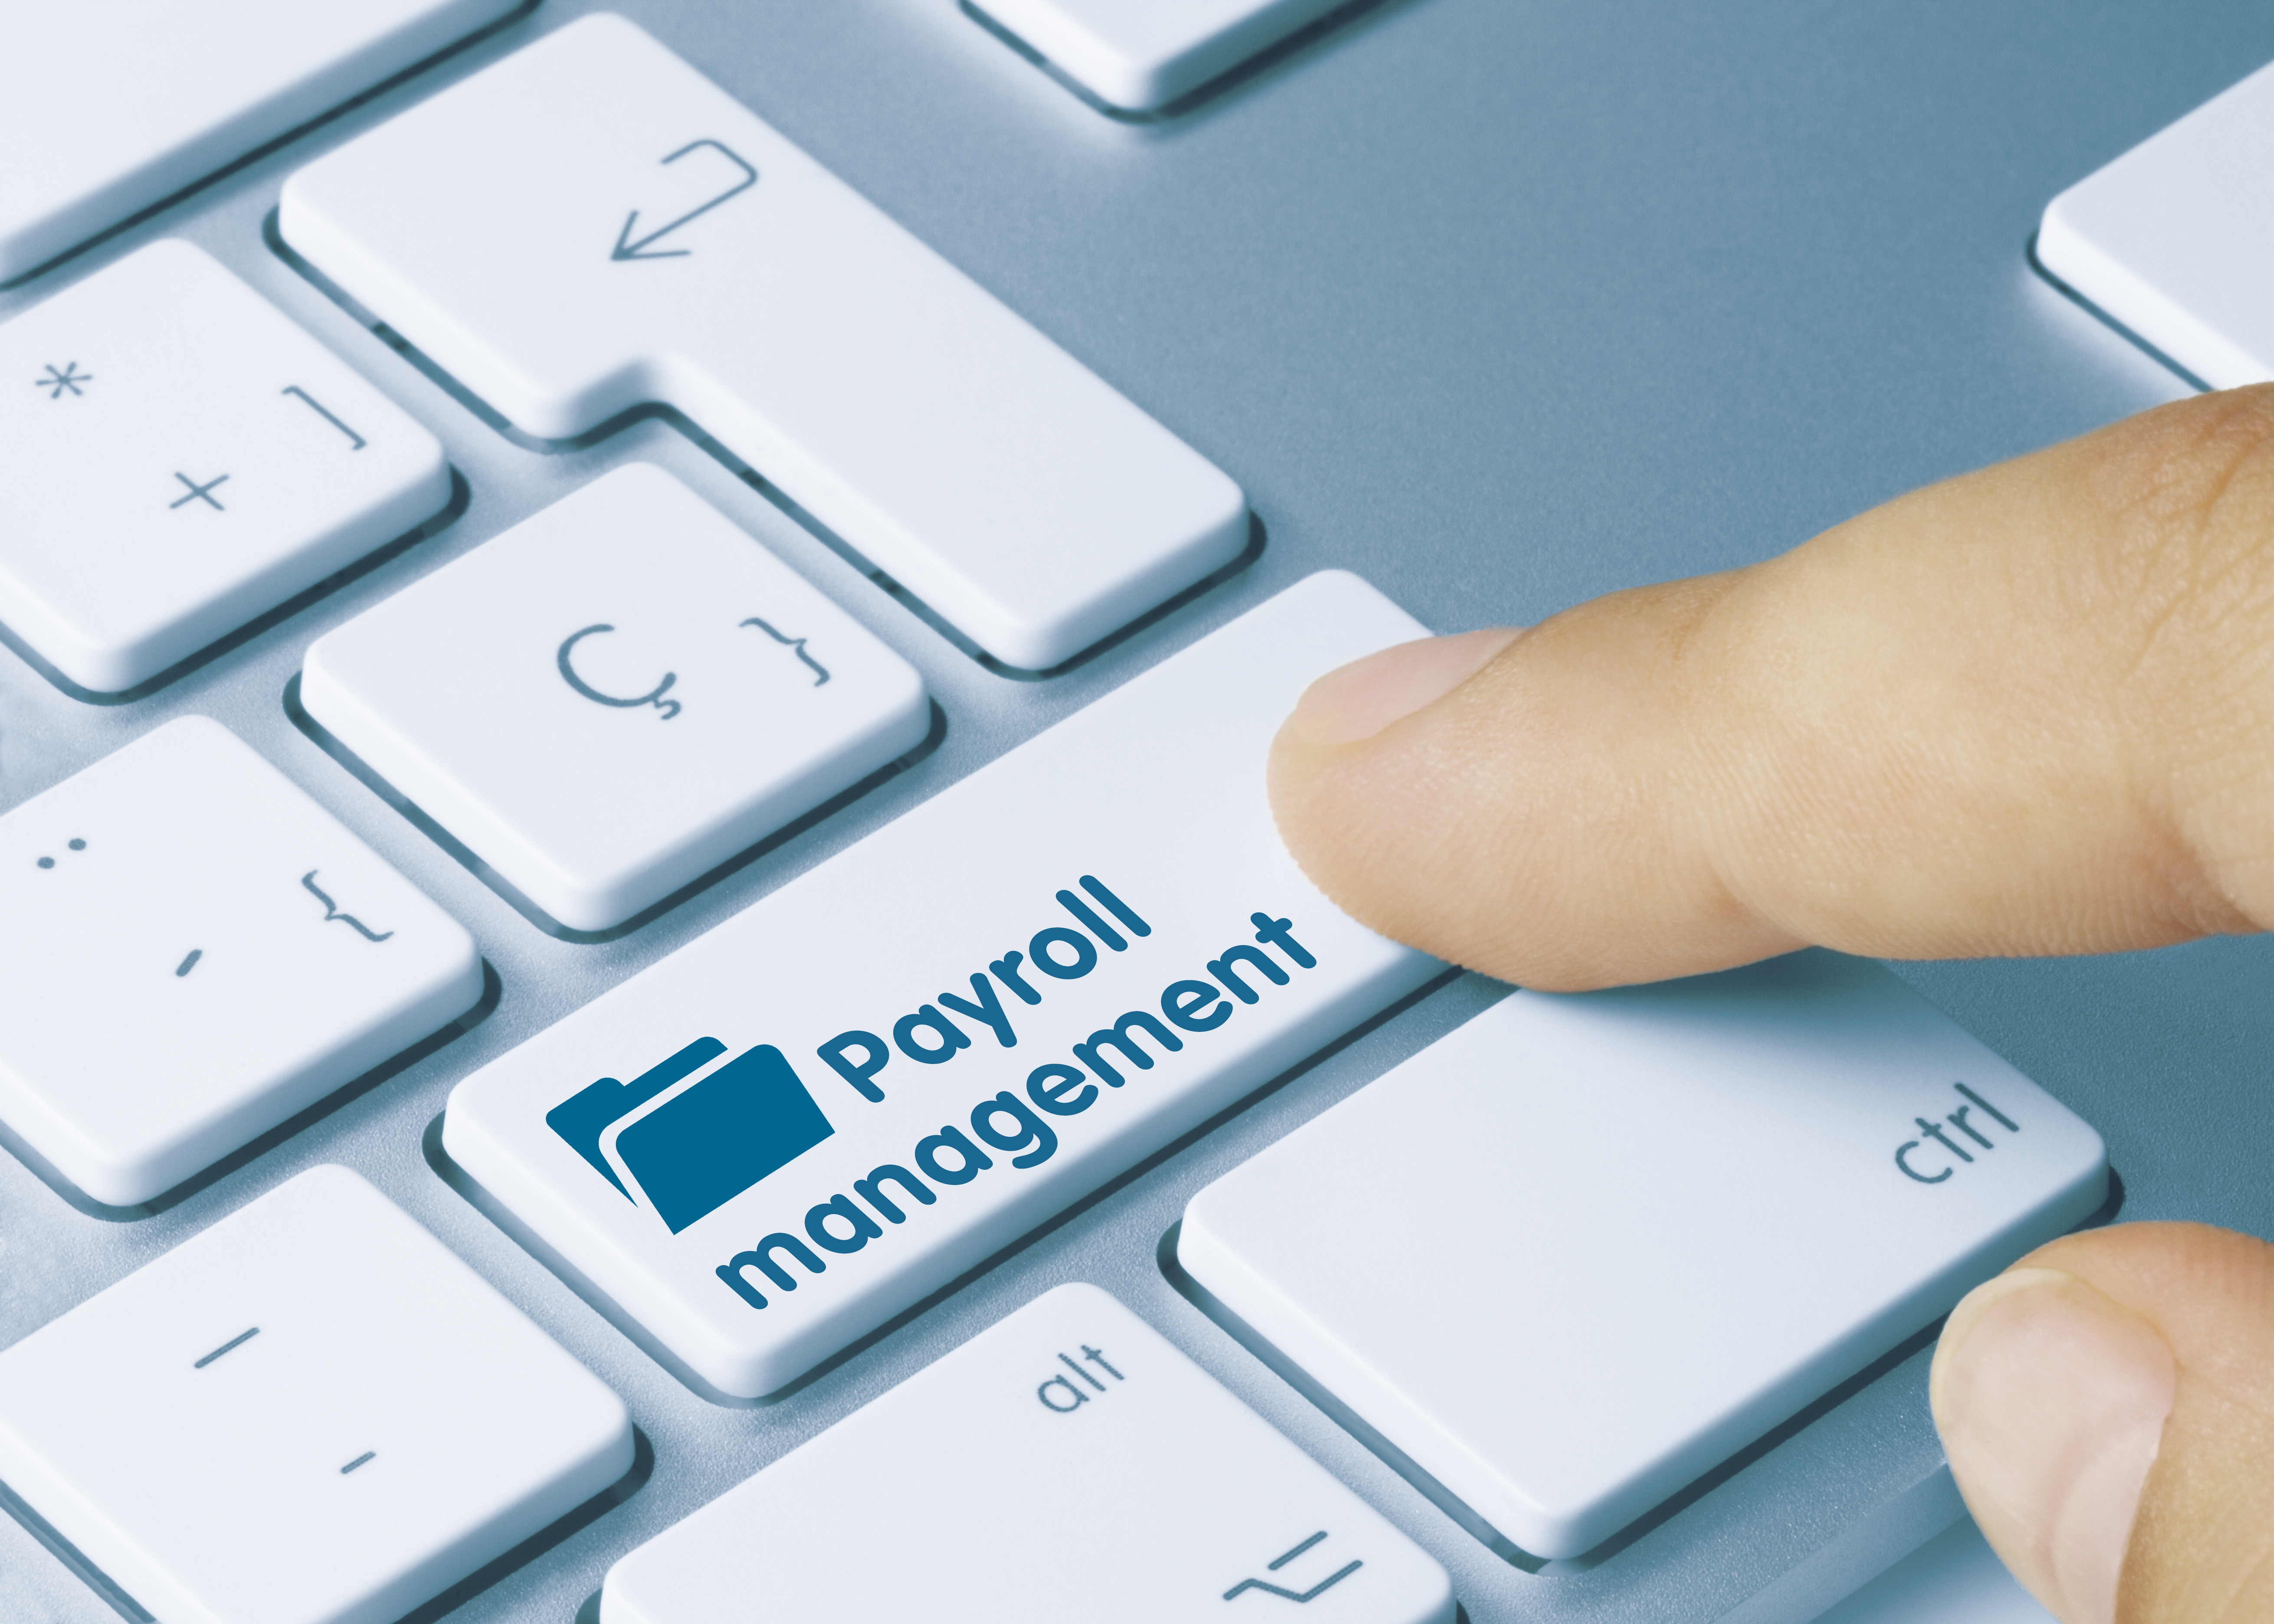 Payroll management - Inscription on Blue Keyboard Key.